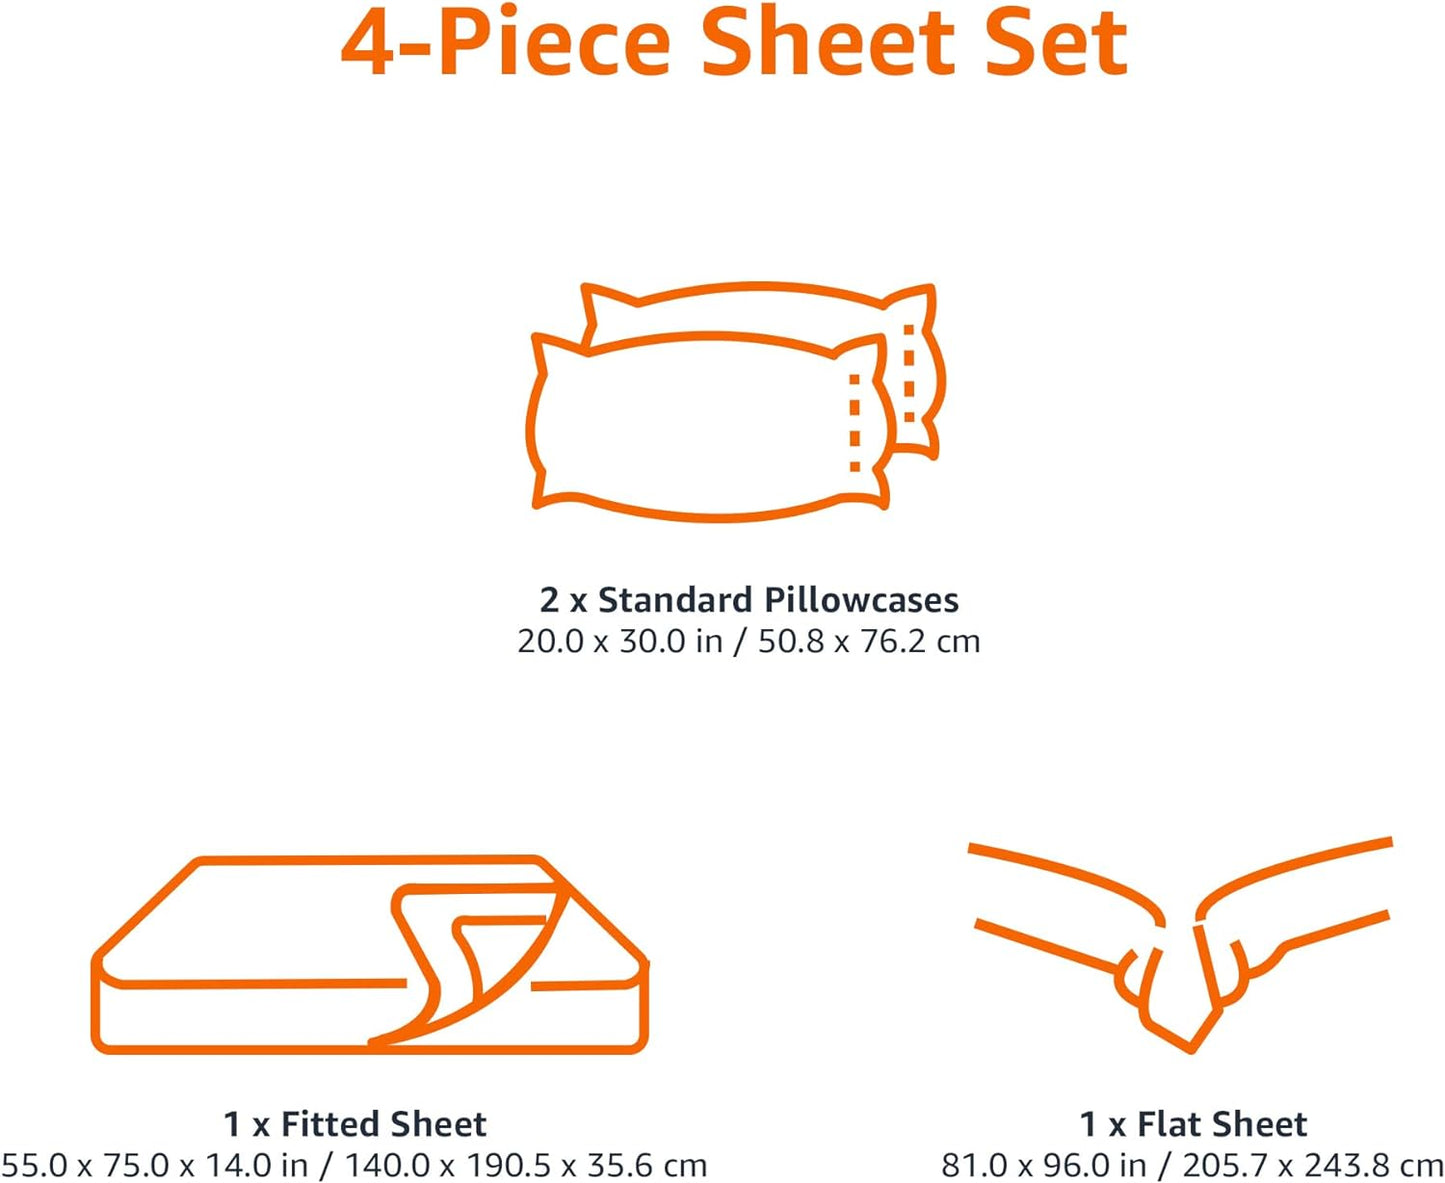 Amazon Basics Lightweight Super Soft Easy Care Microfiber 4-Piece Bed Sheet Set